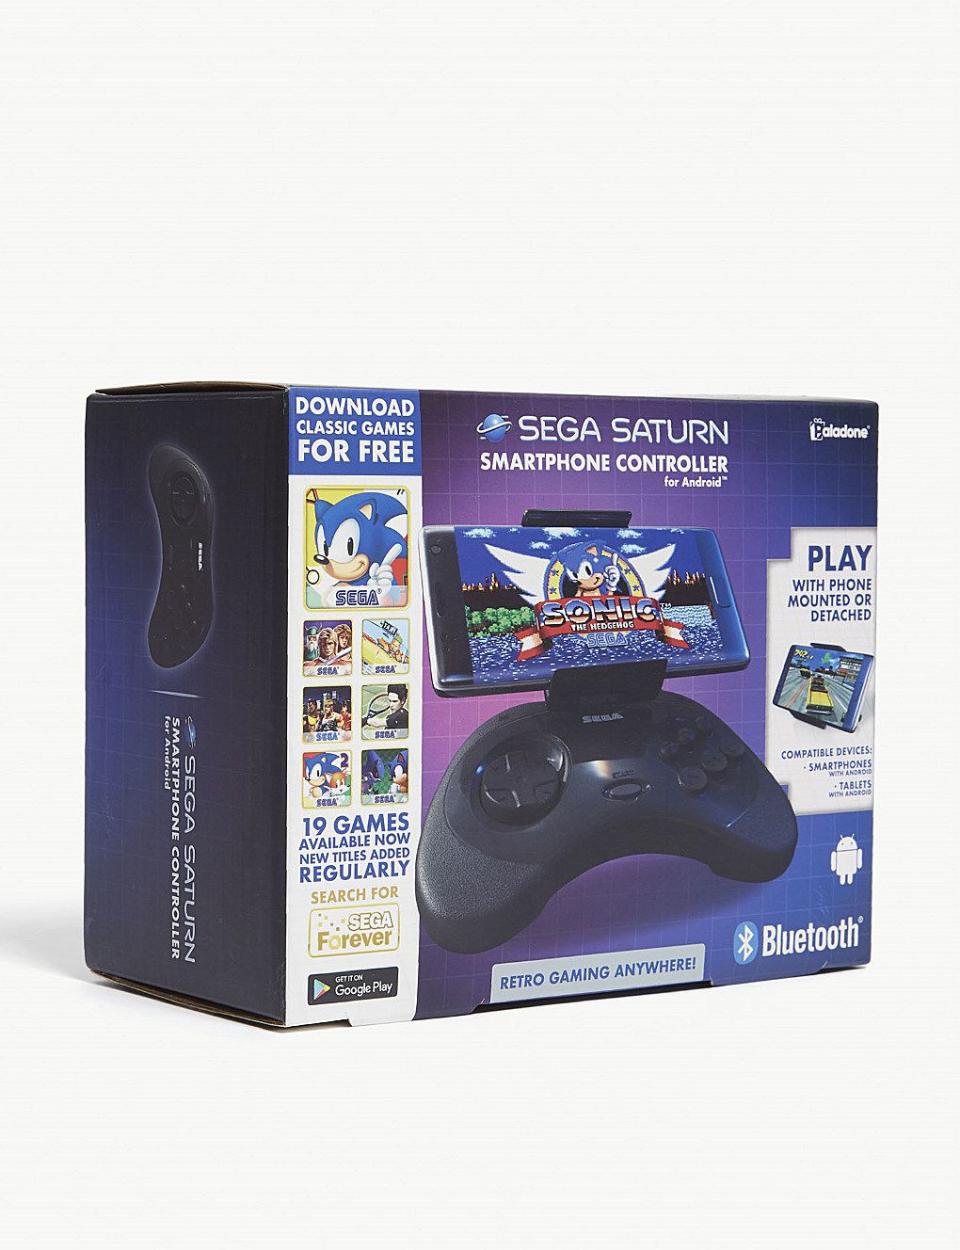 52) Paladone Sega Saturn smartphone controller